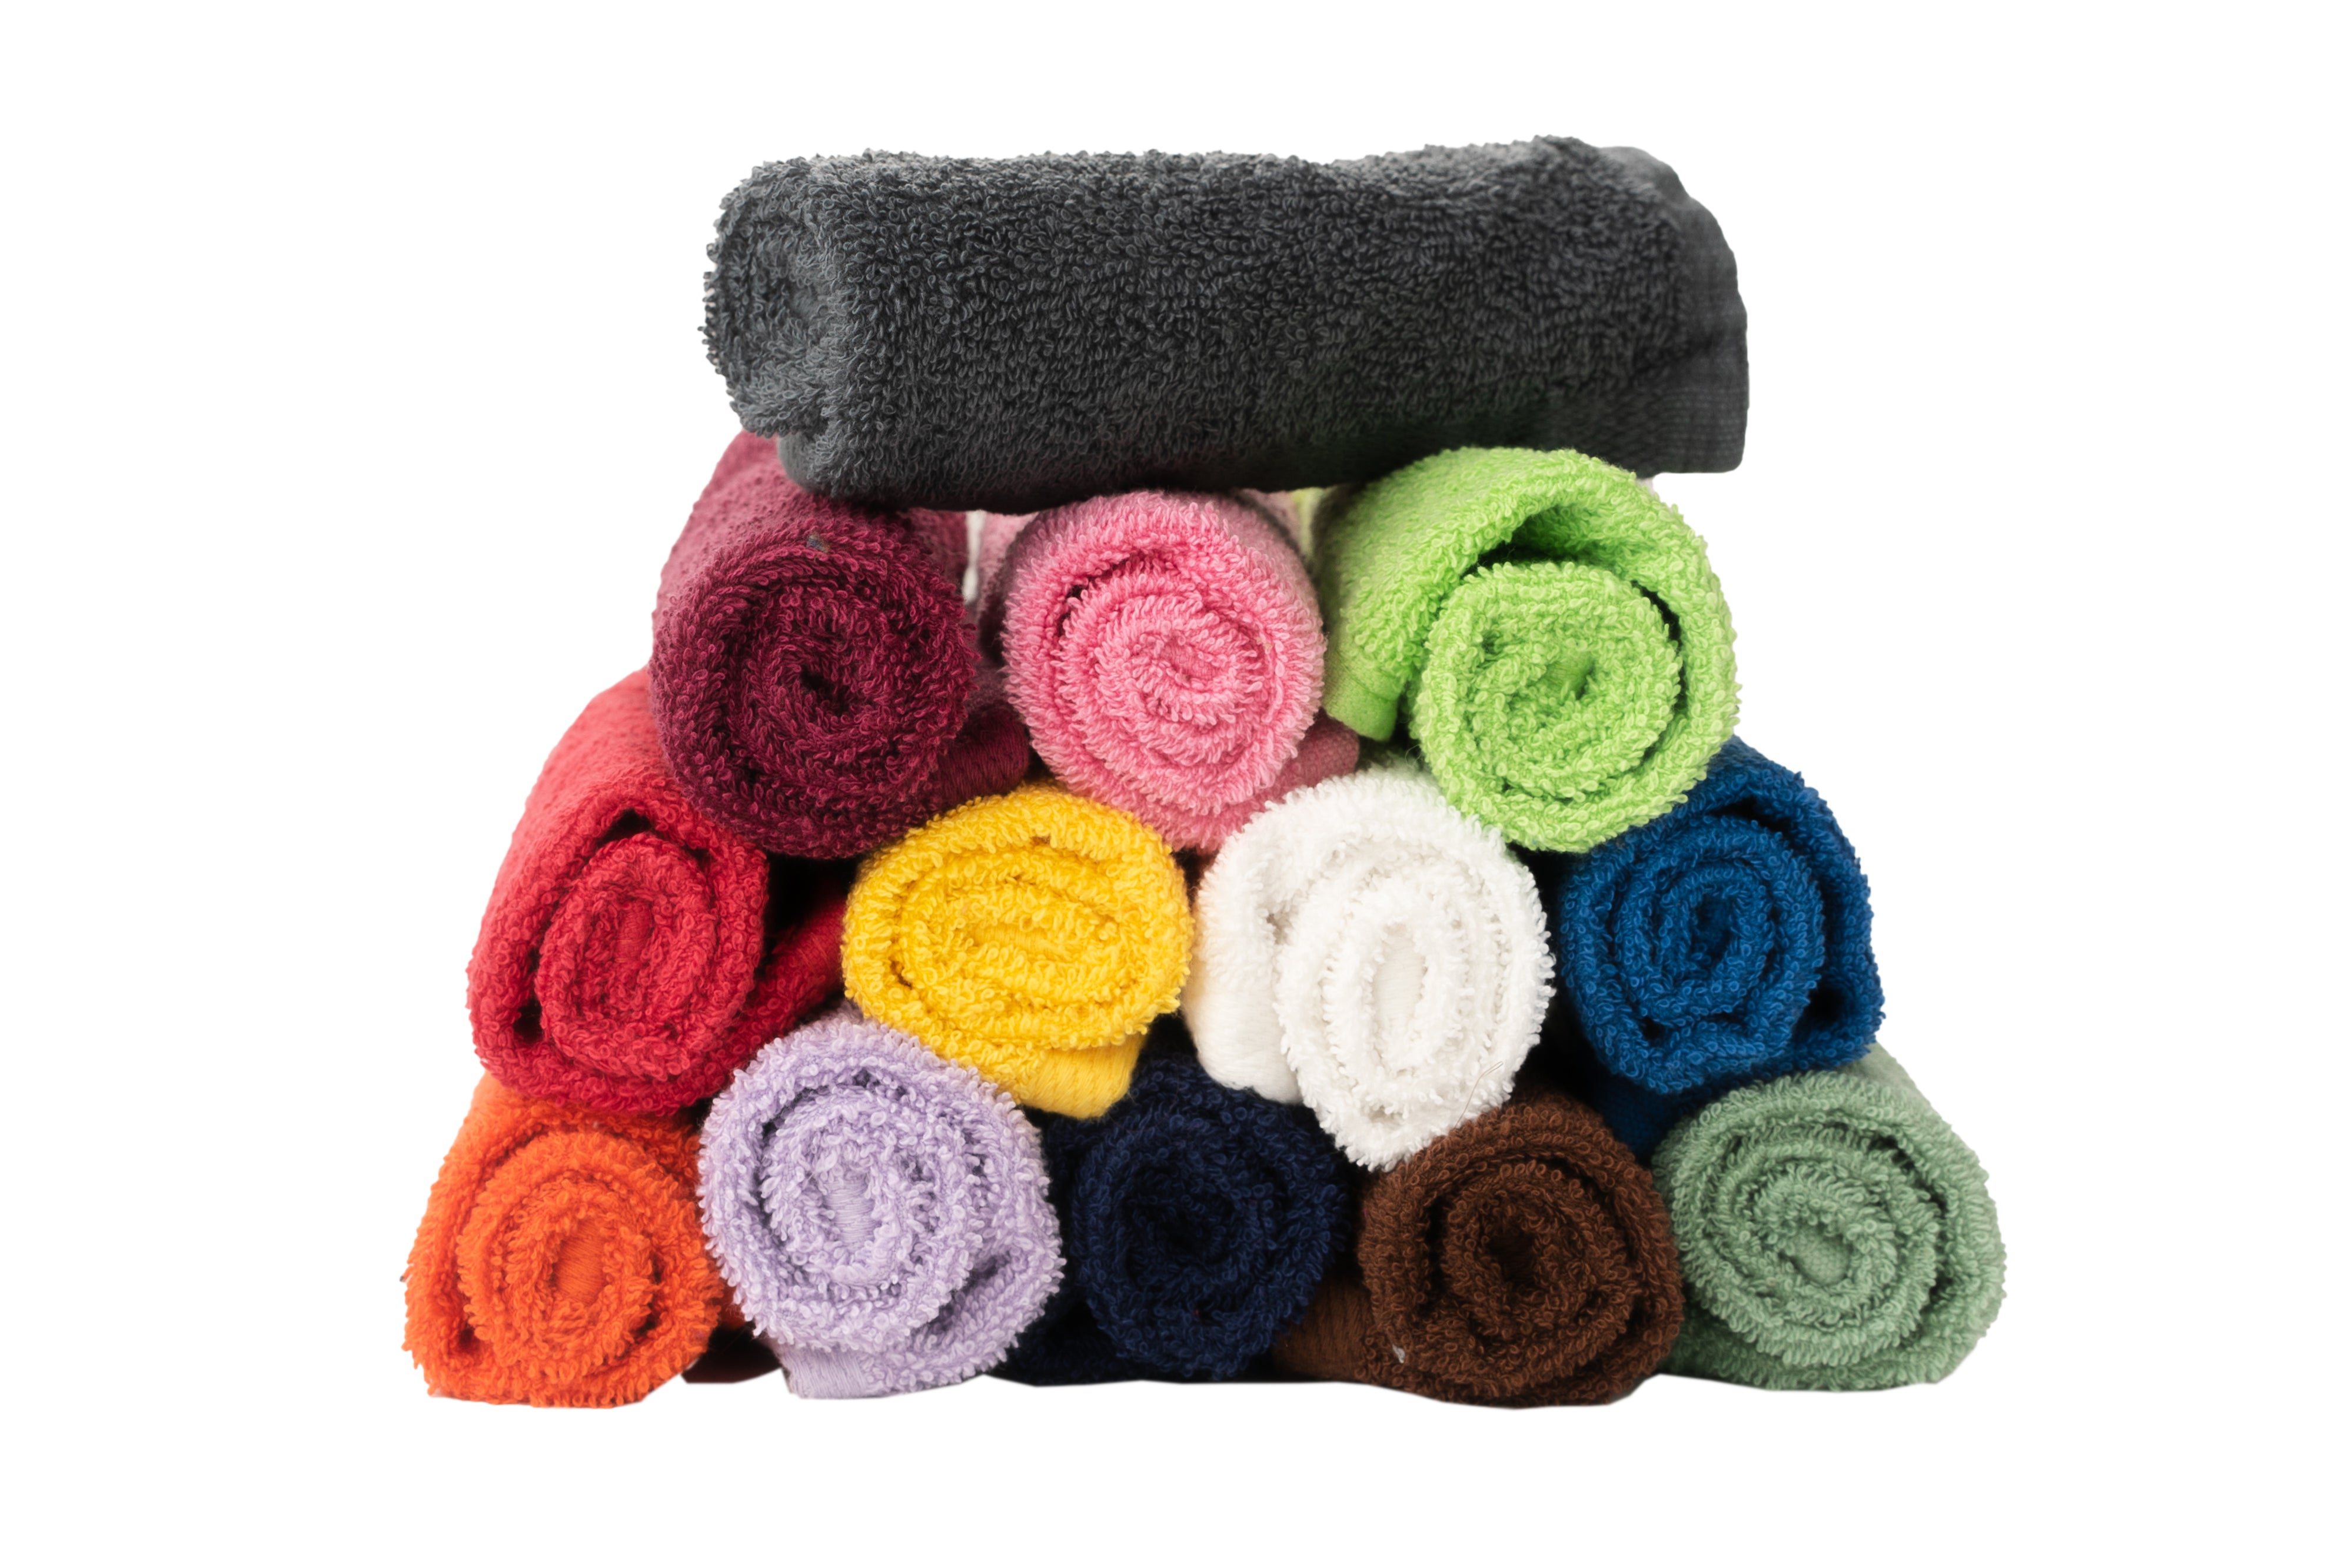 Partex dlux1™ Towels - Small